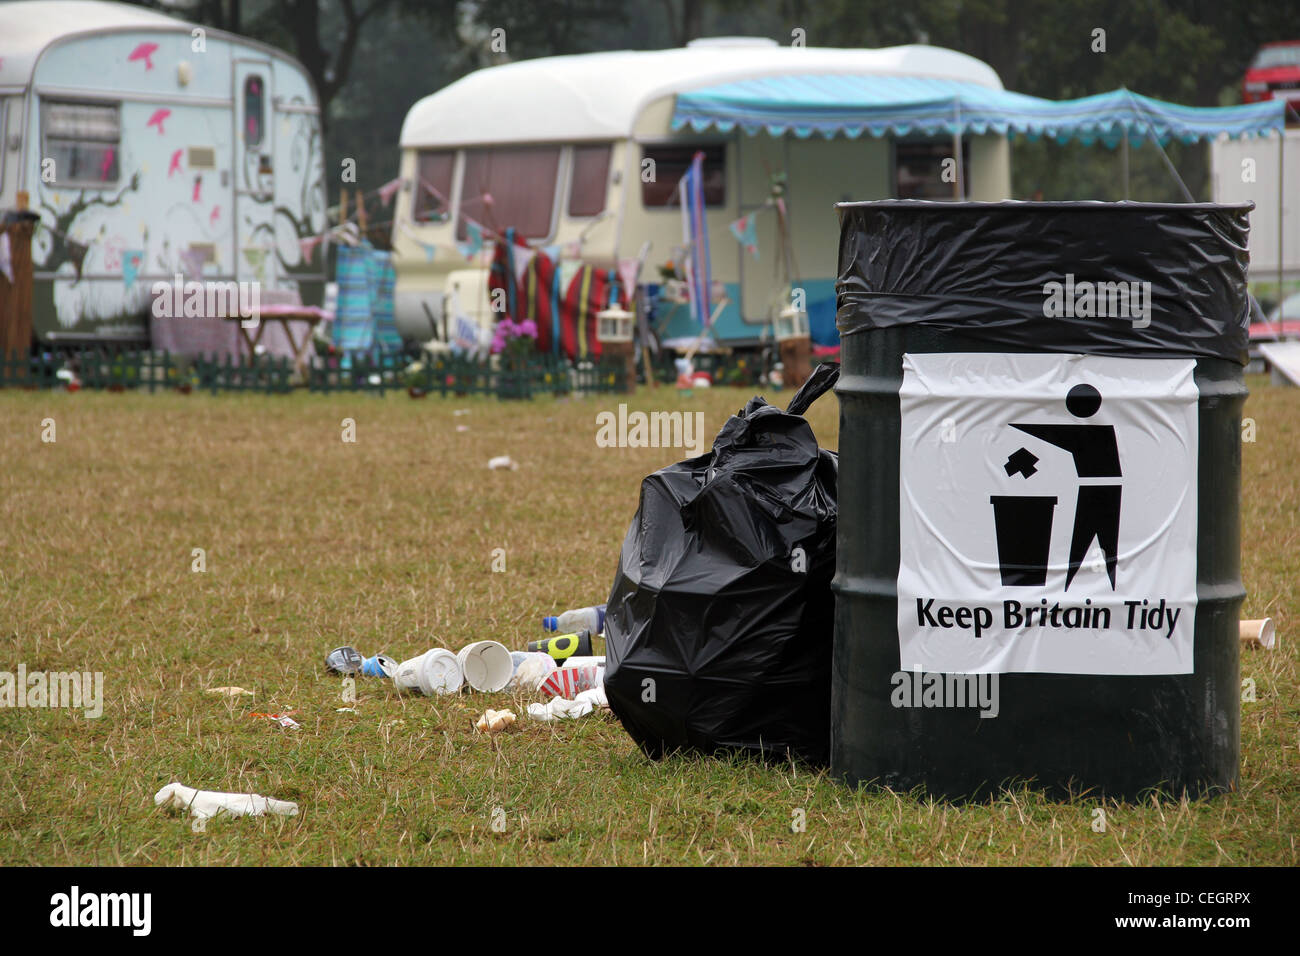 Litter bin at a festival Stock Photo